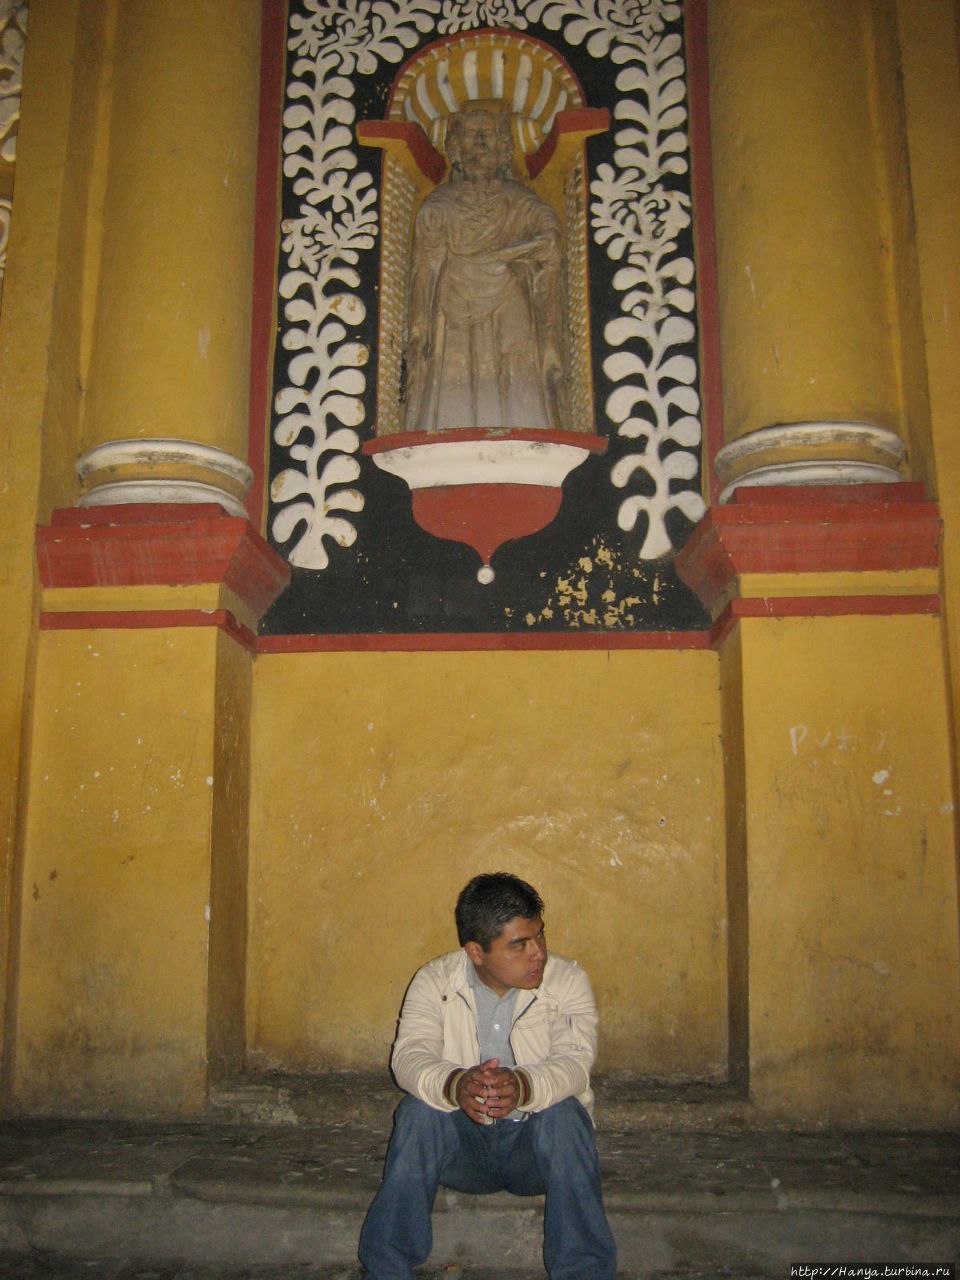 Кафедральный собор Сан-Кристобаль-де-Лас-Касас, Мексика